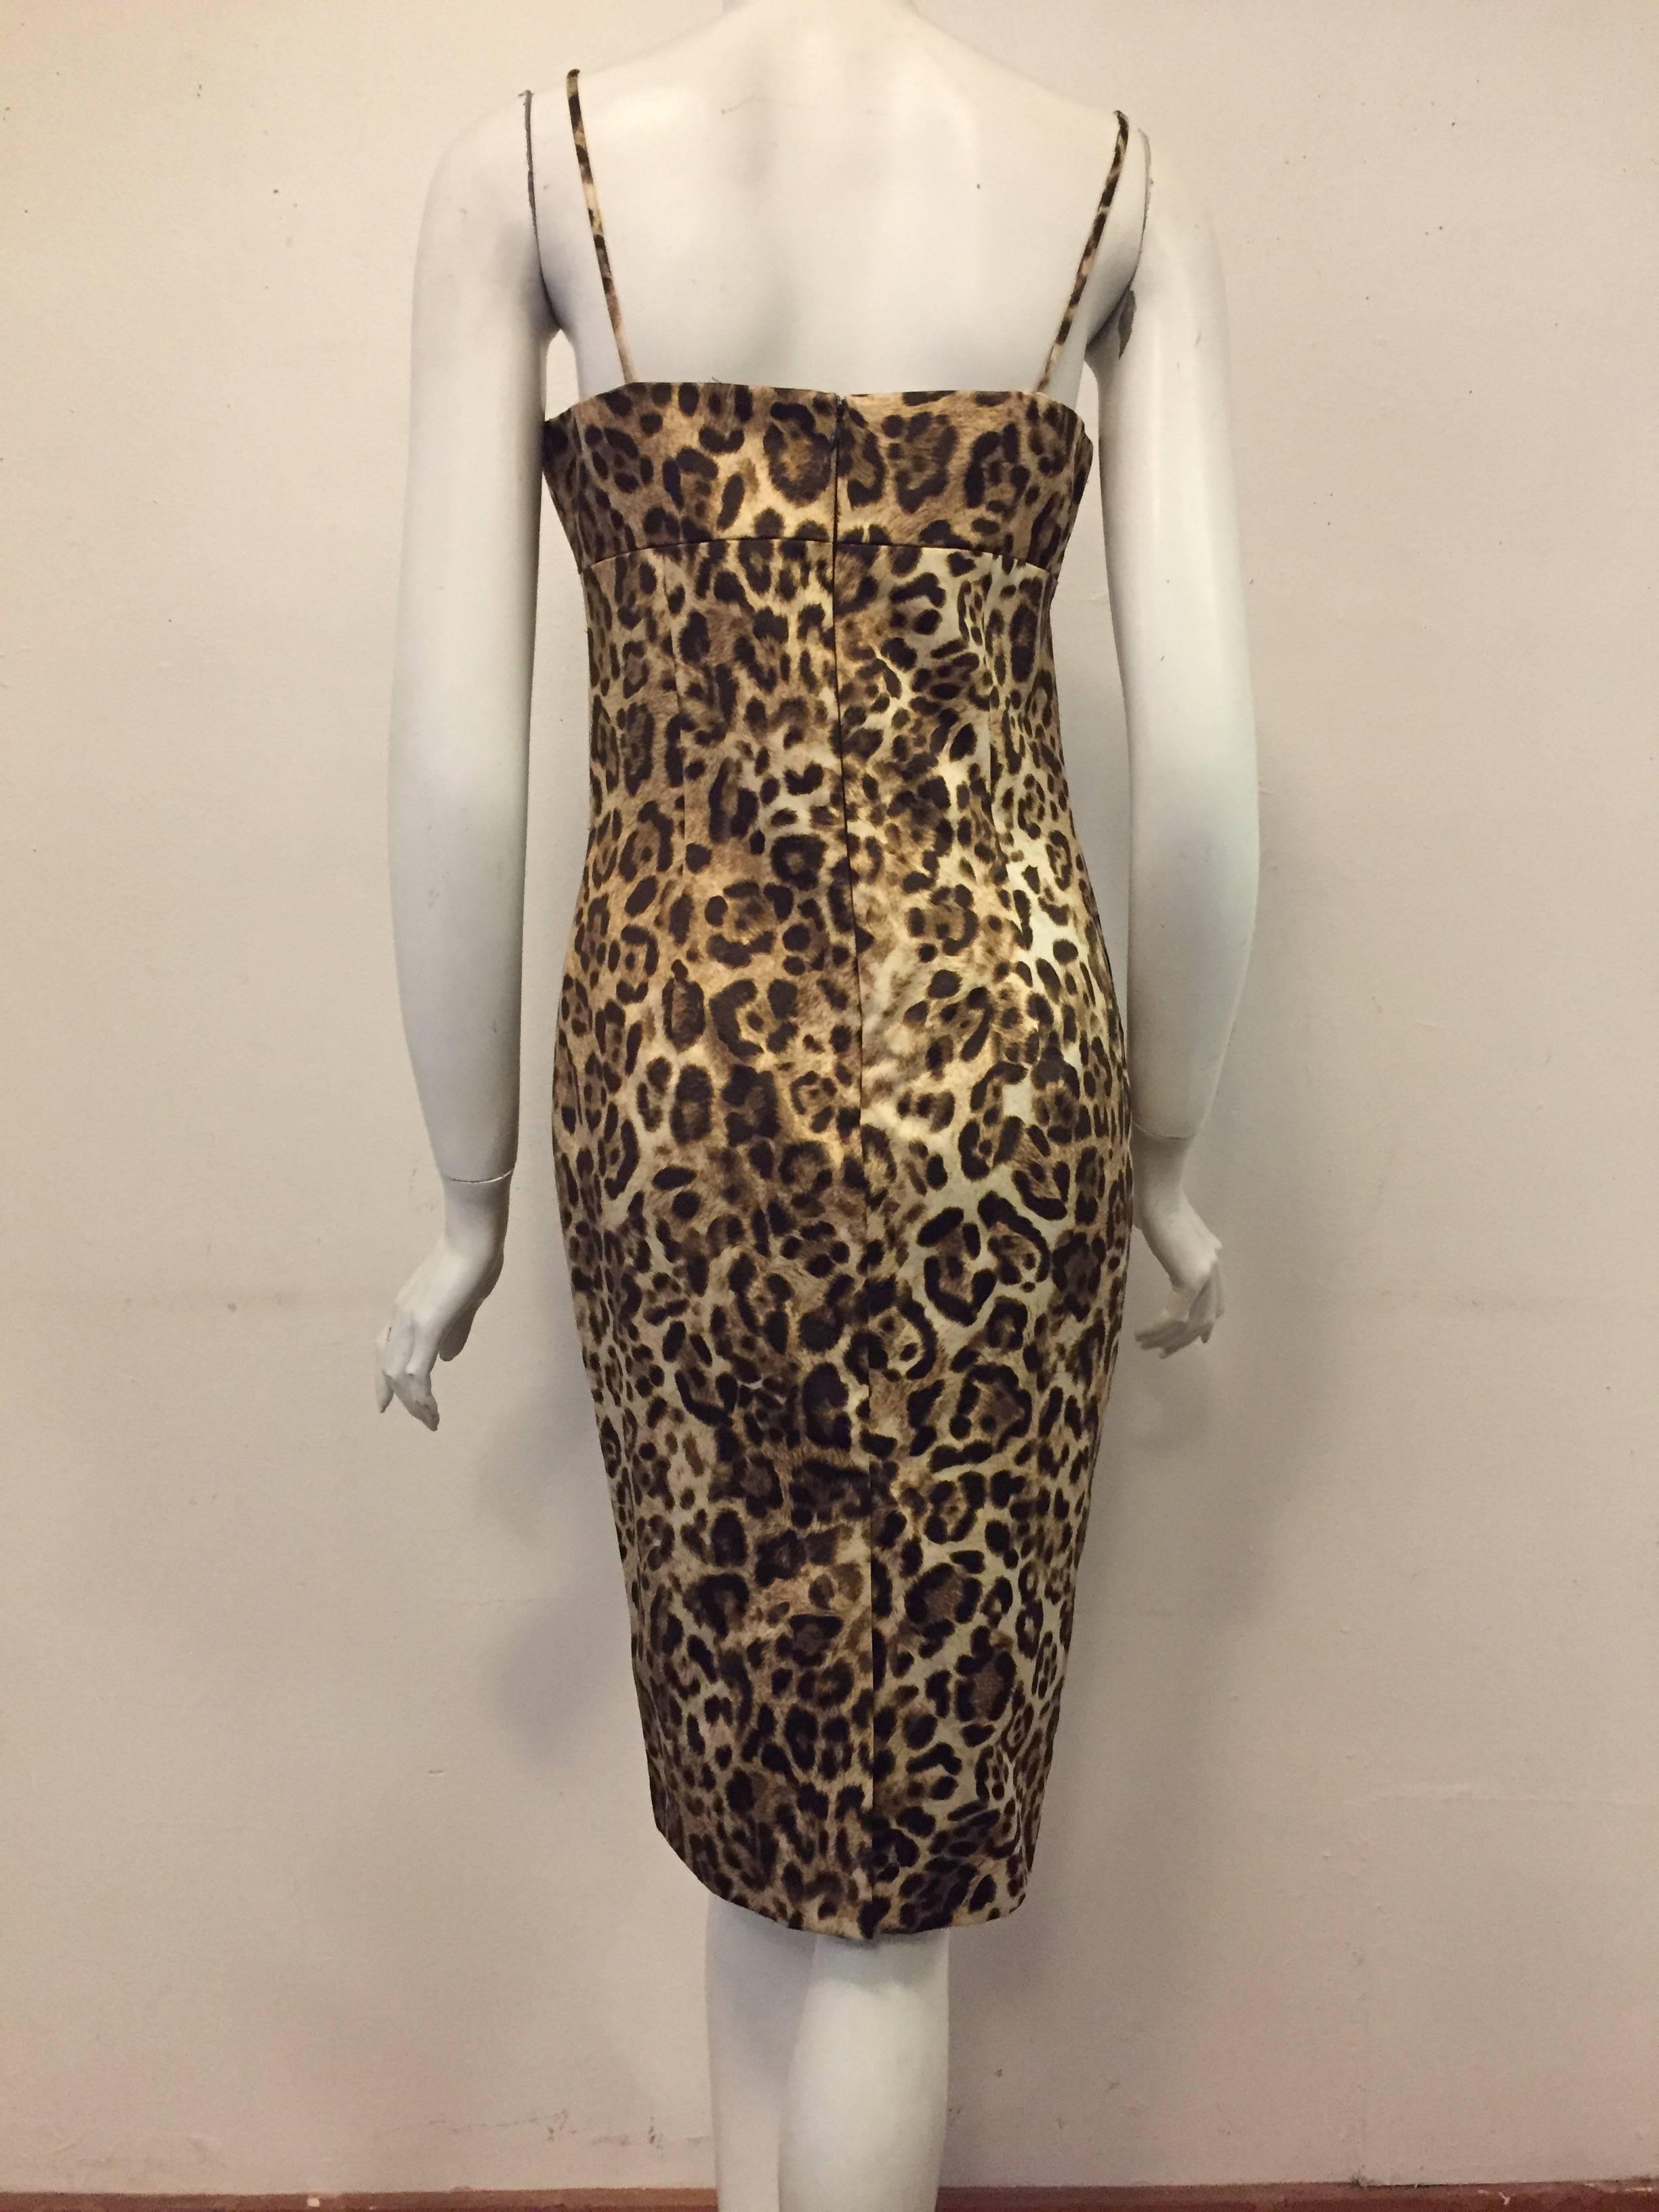 michael kors leopard dress